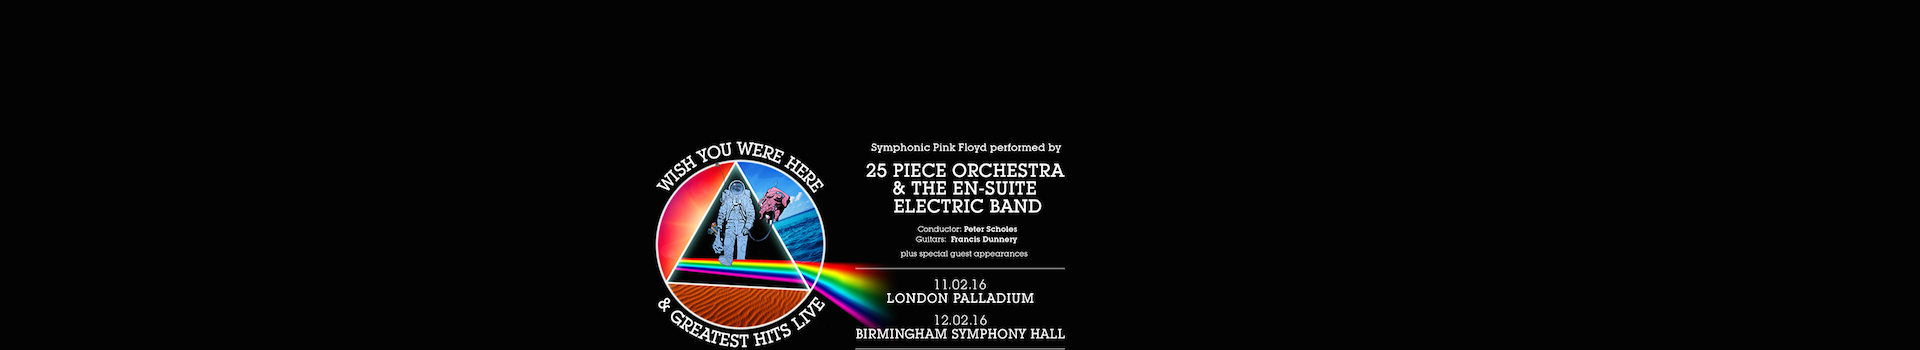 Symphonic Floyd tickets London